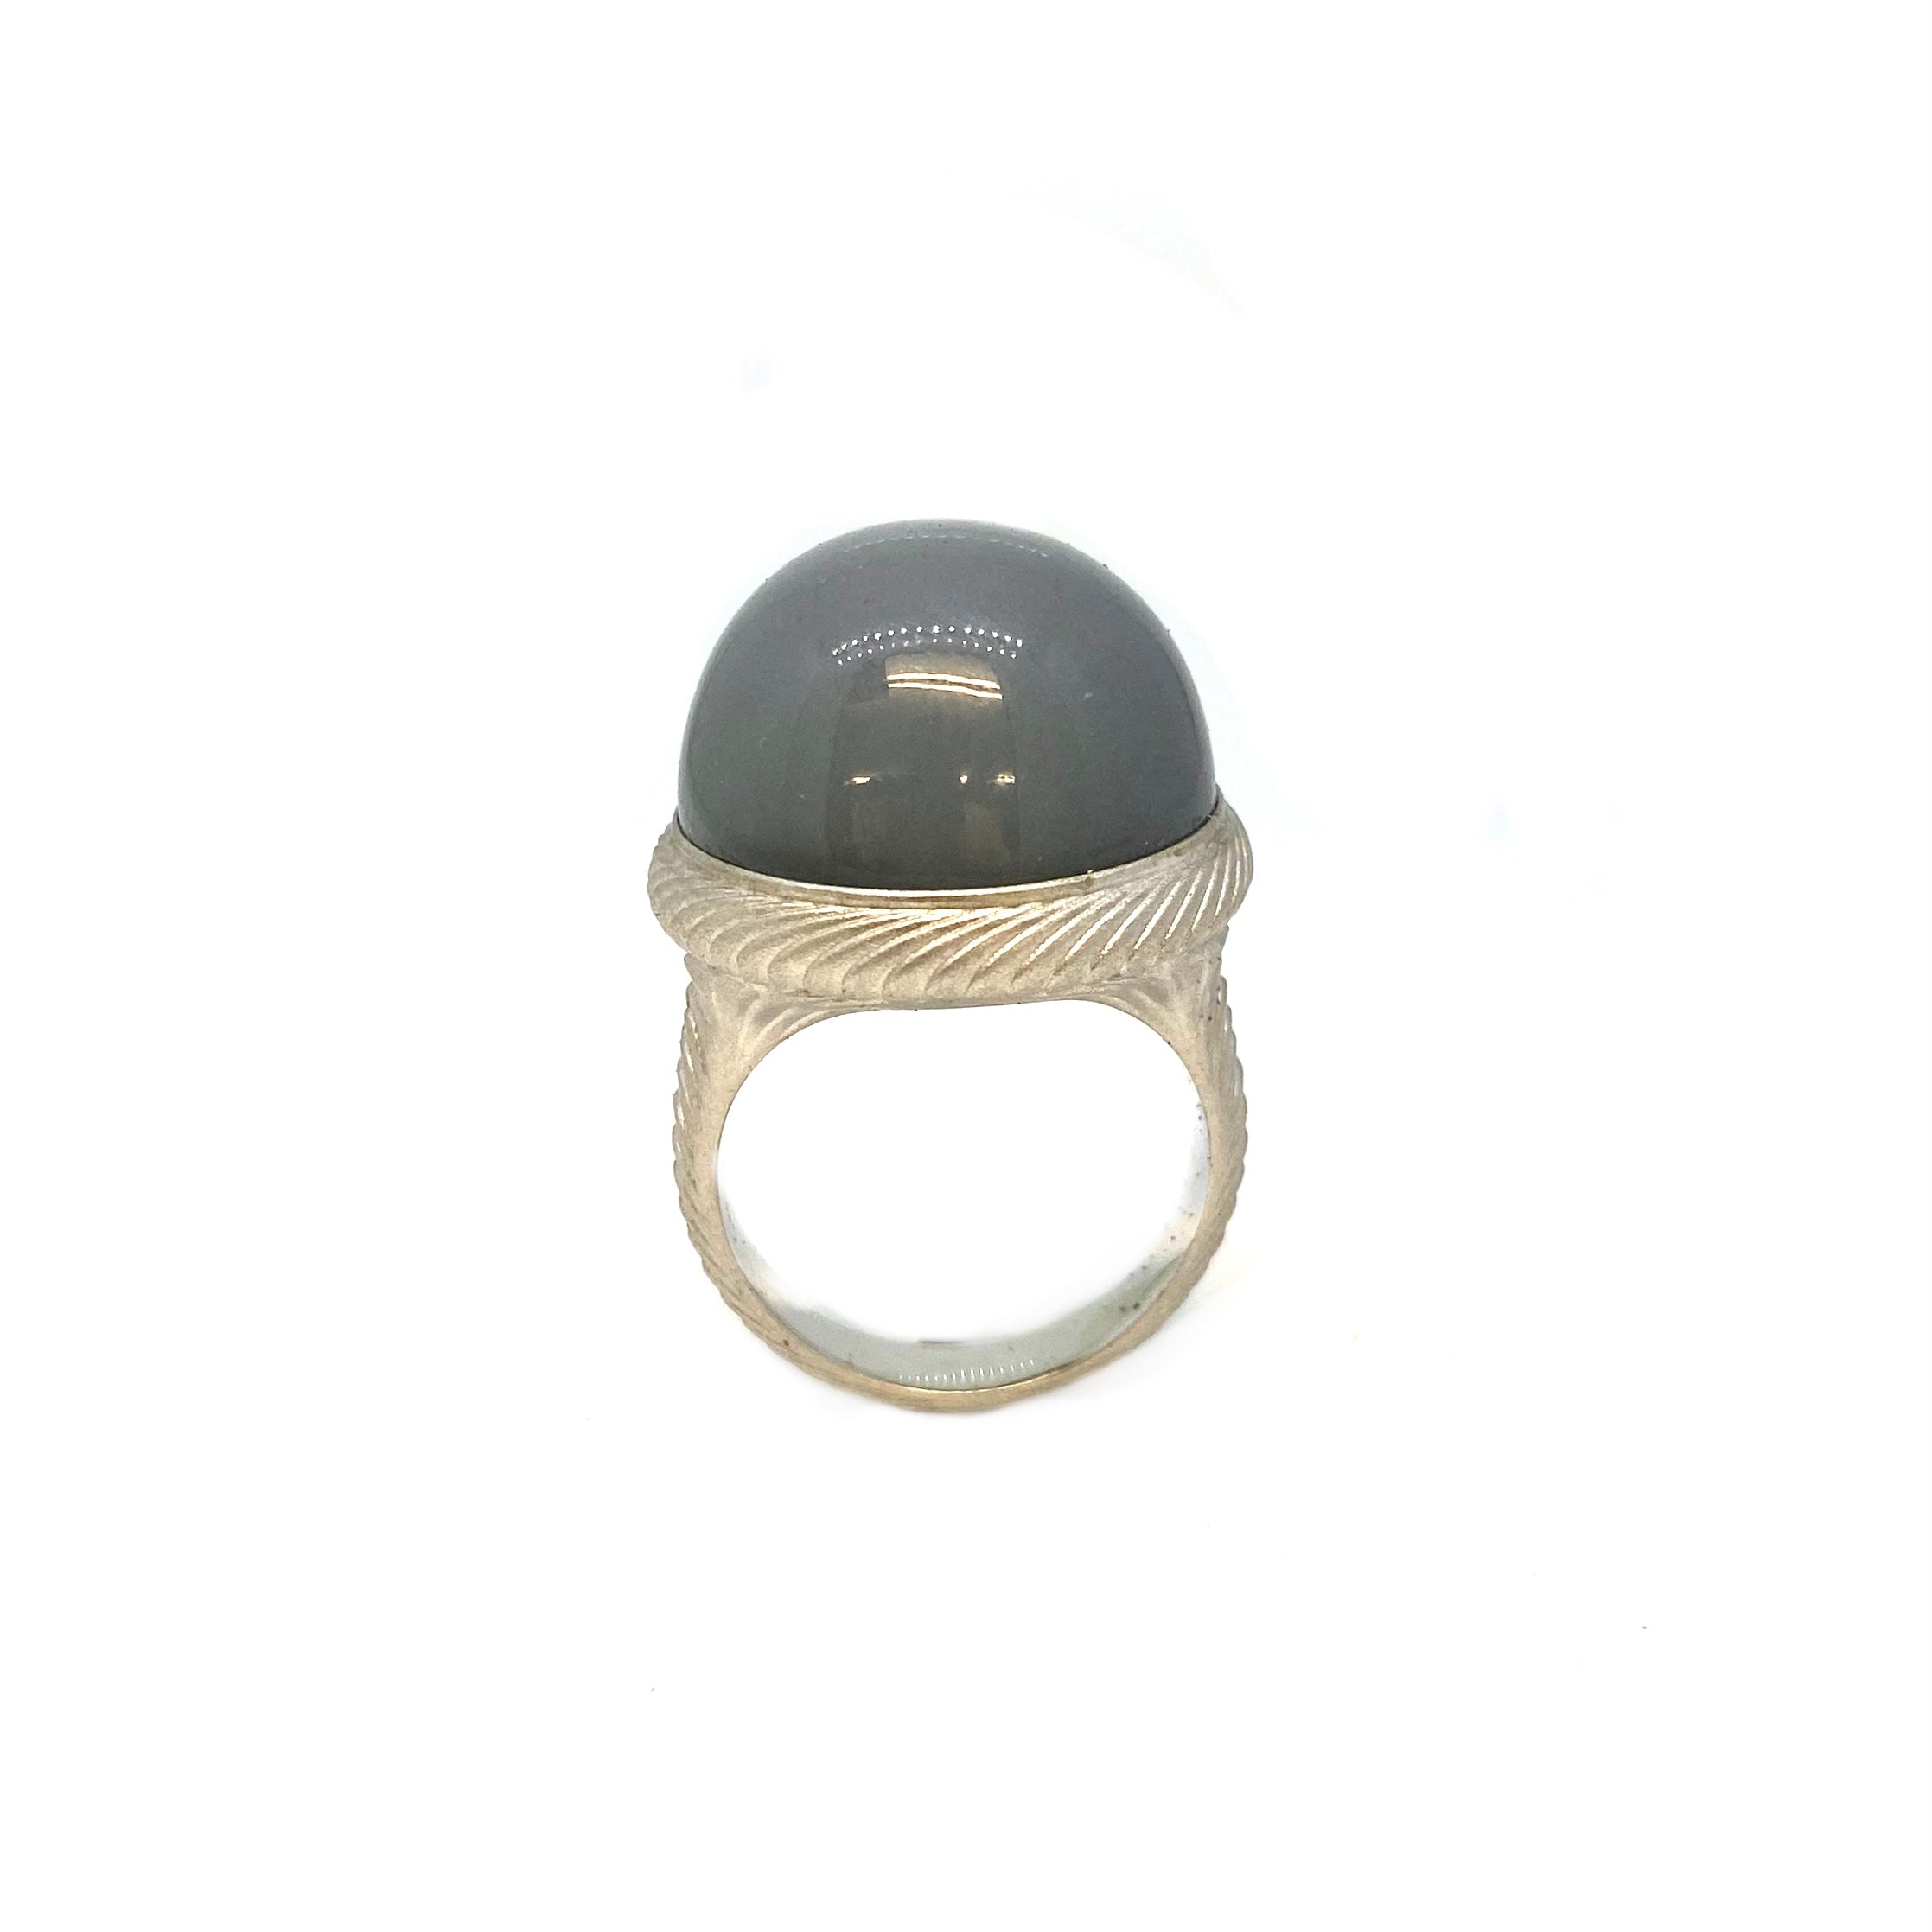 Lesunja Sepia White Gold grey Moonstone Ring